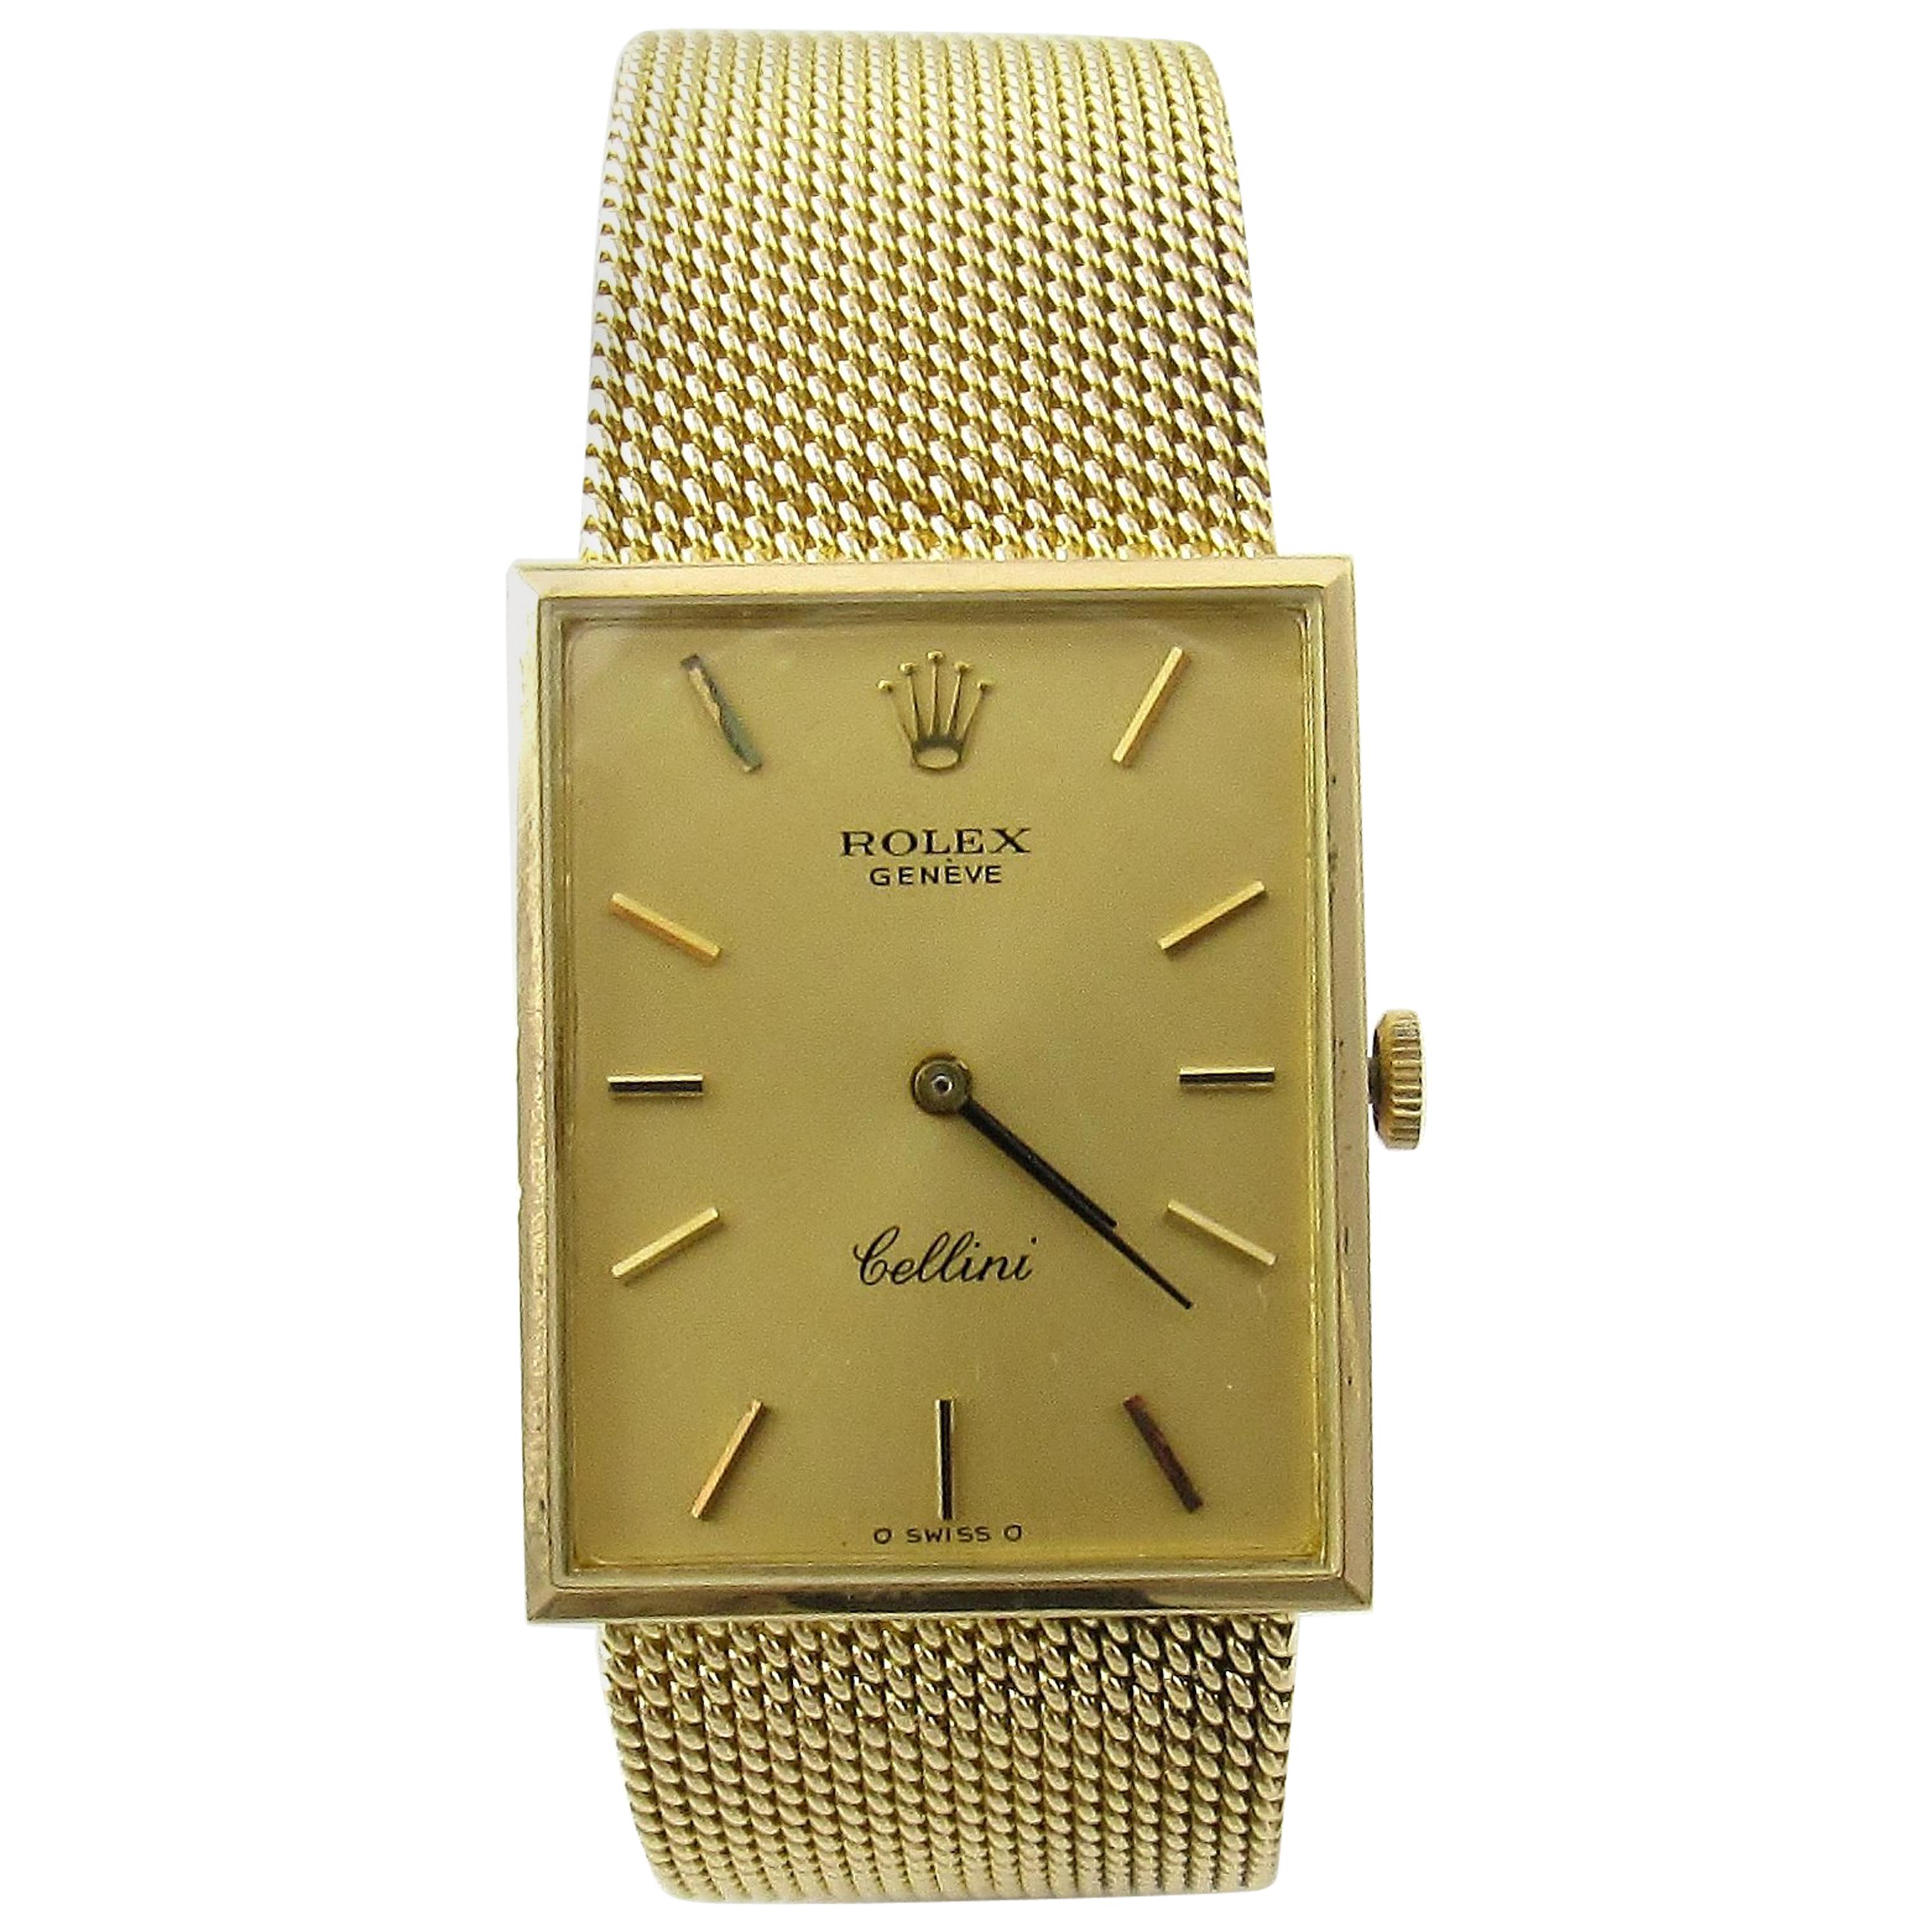 1970s Rolex 18 Karat Yellow Gold Cellini Watch 4089 1600 Caliber Movement